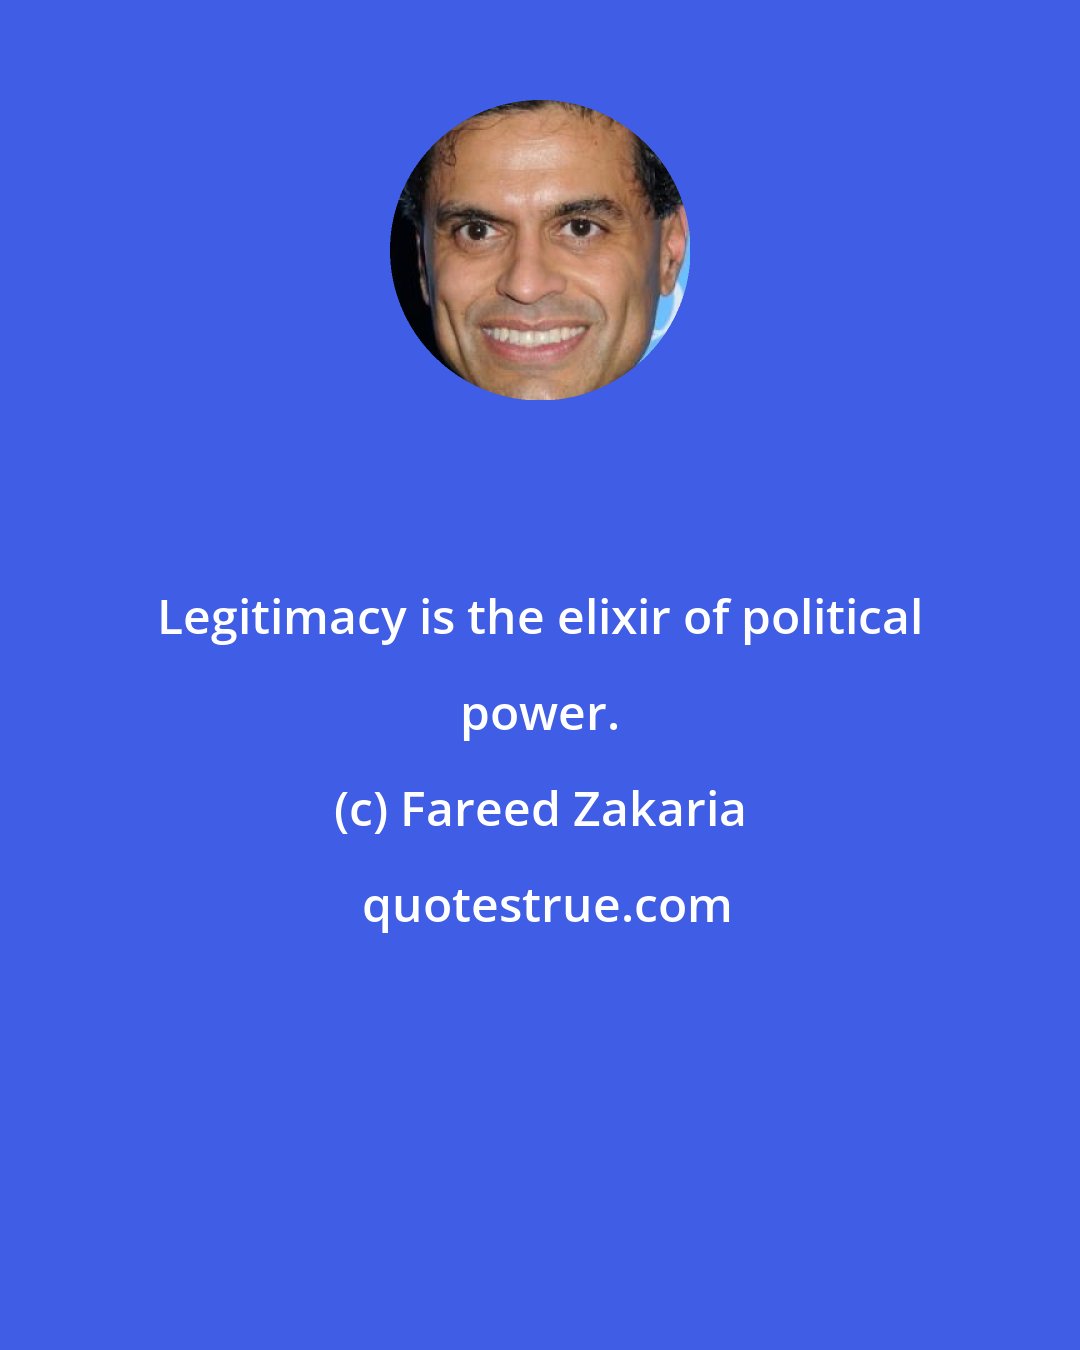 Fareed Zakaria: Legitimacy is the elixir of political power.